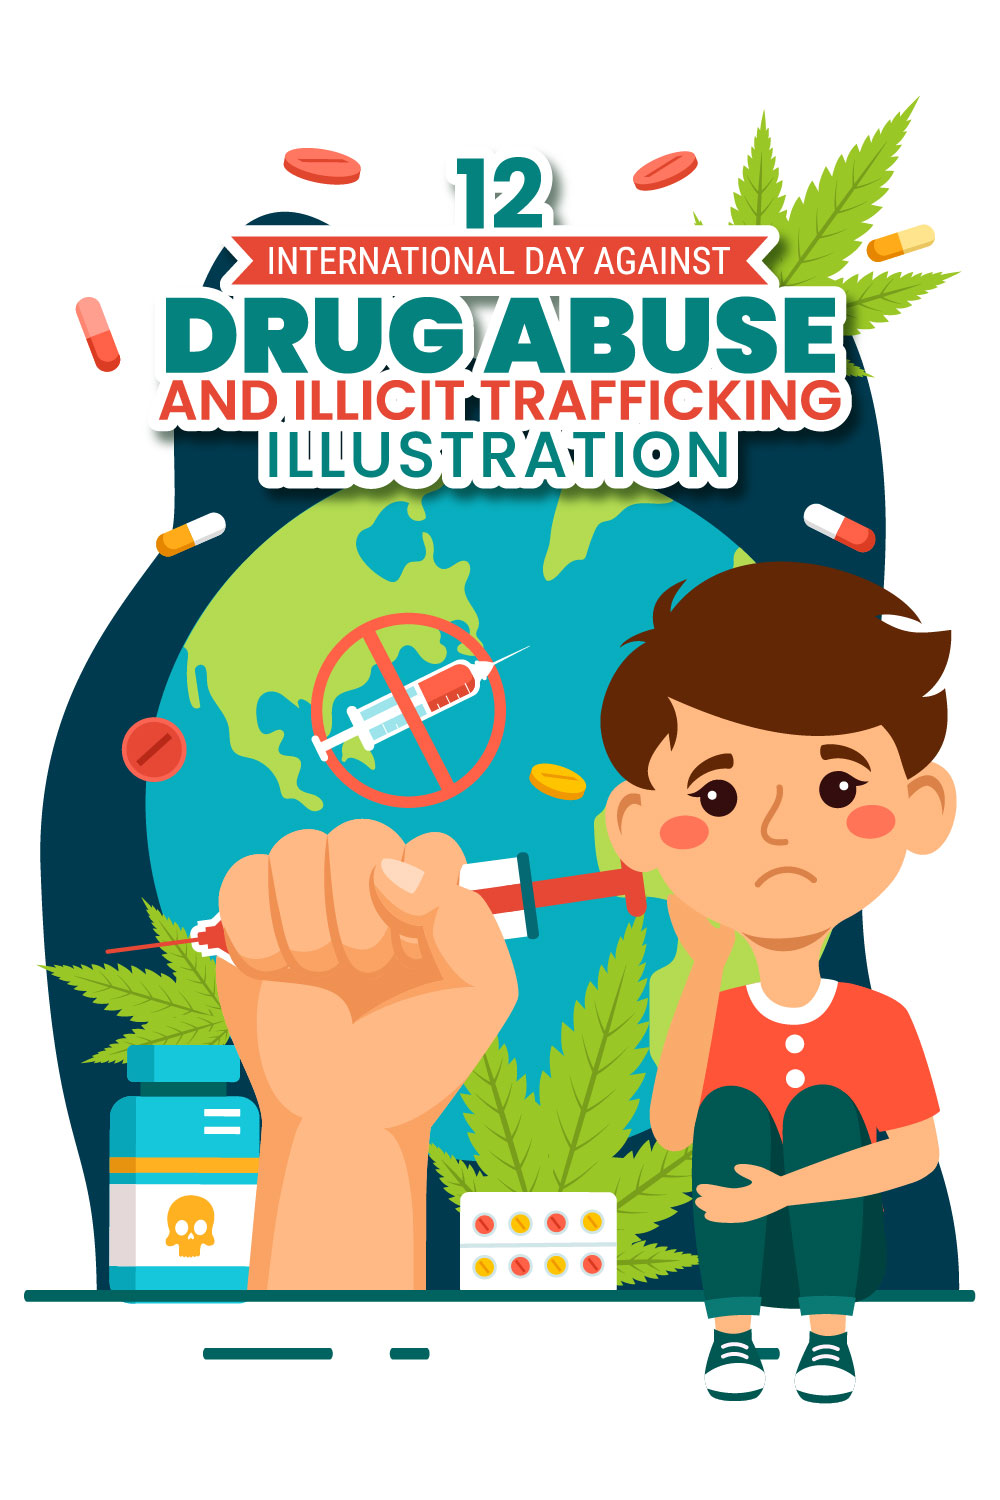 12 Drug Abuse and Trafficking illustration pinterest preview image.